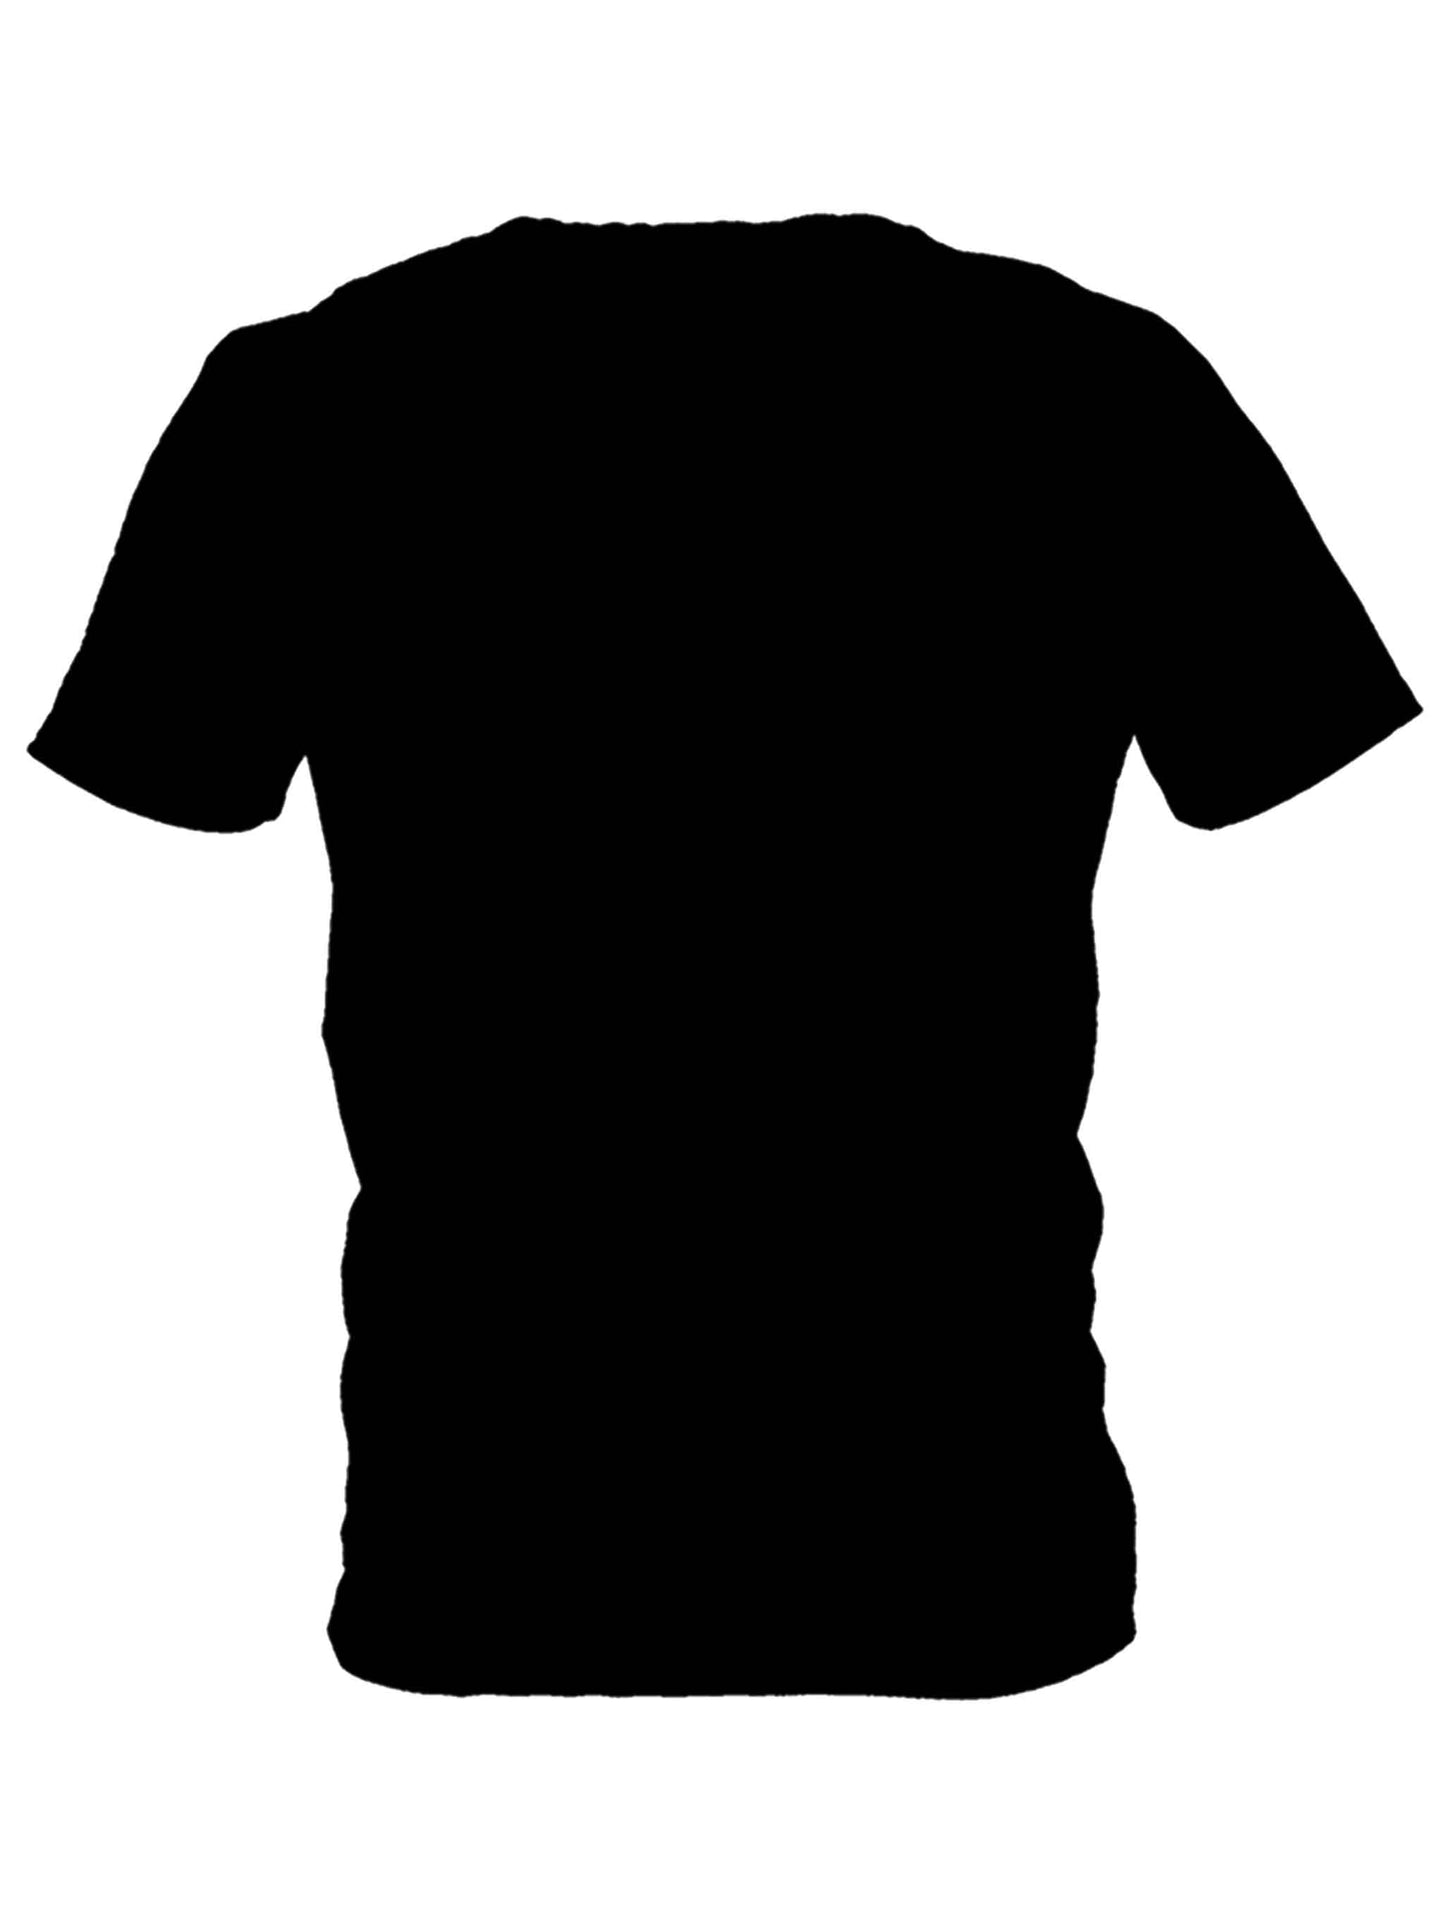 Flow State Men's Graphic T-Shirt, iEDM, | iEDM